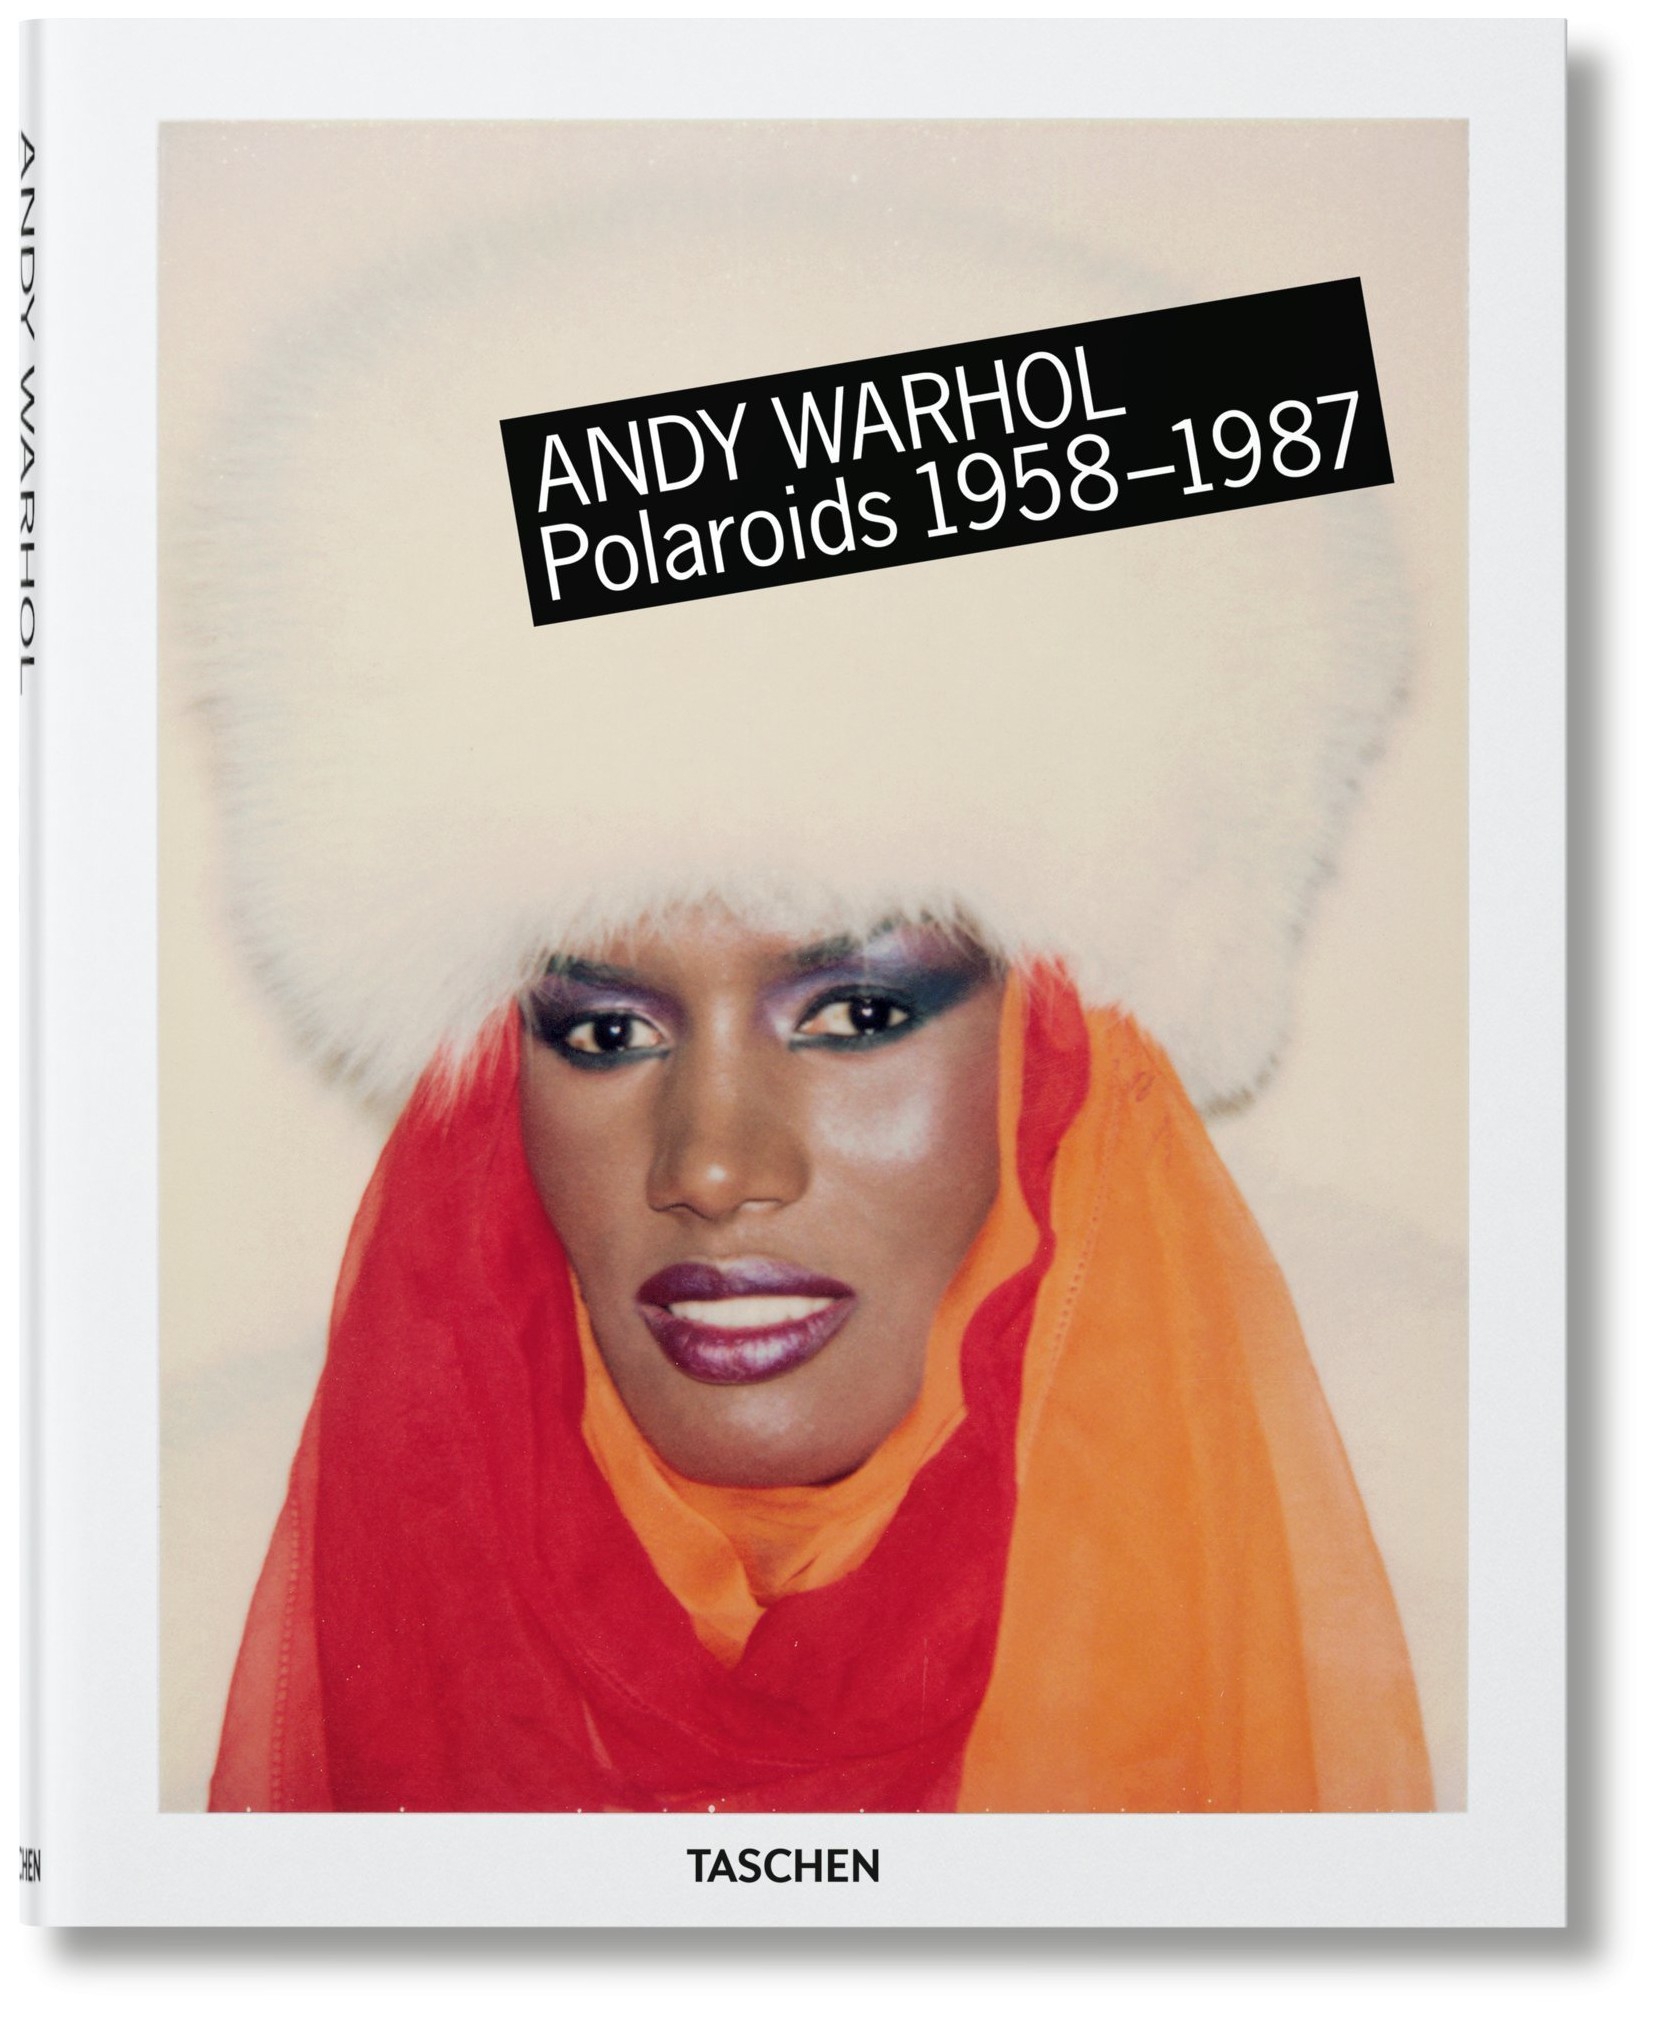 Woodward R., Golden R. - Warhol: Polaroids 1958-1987